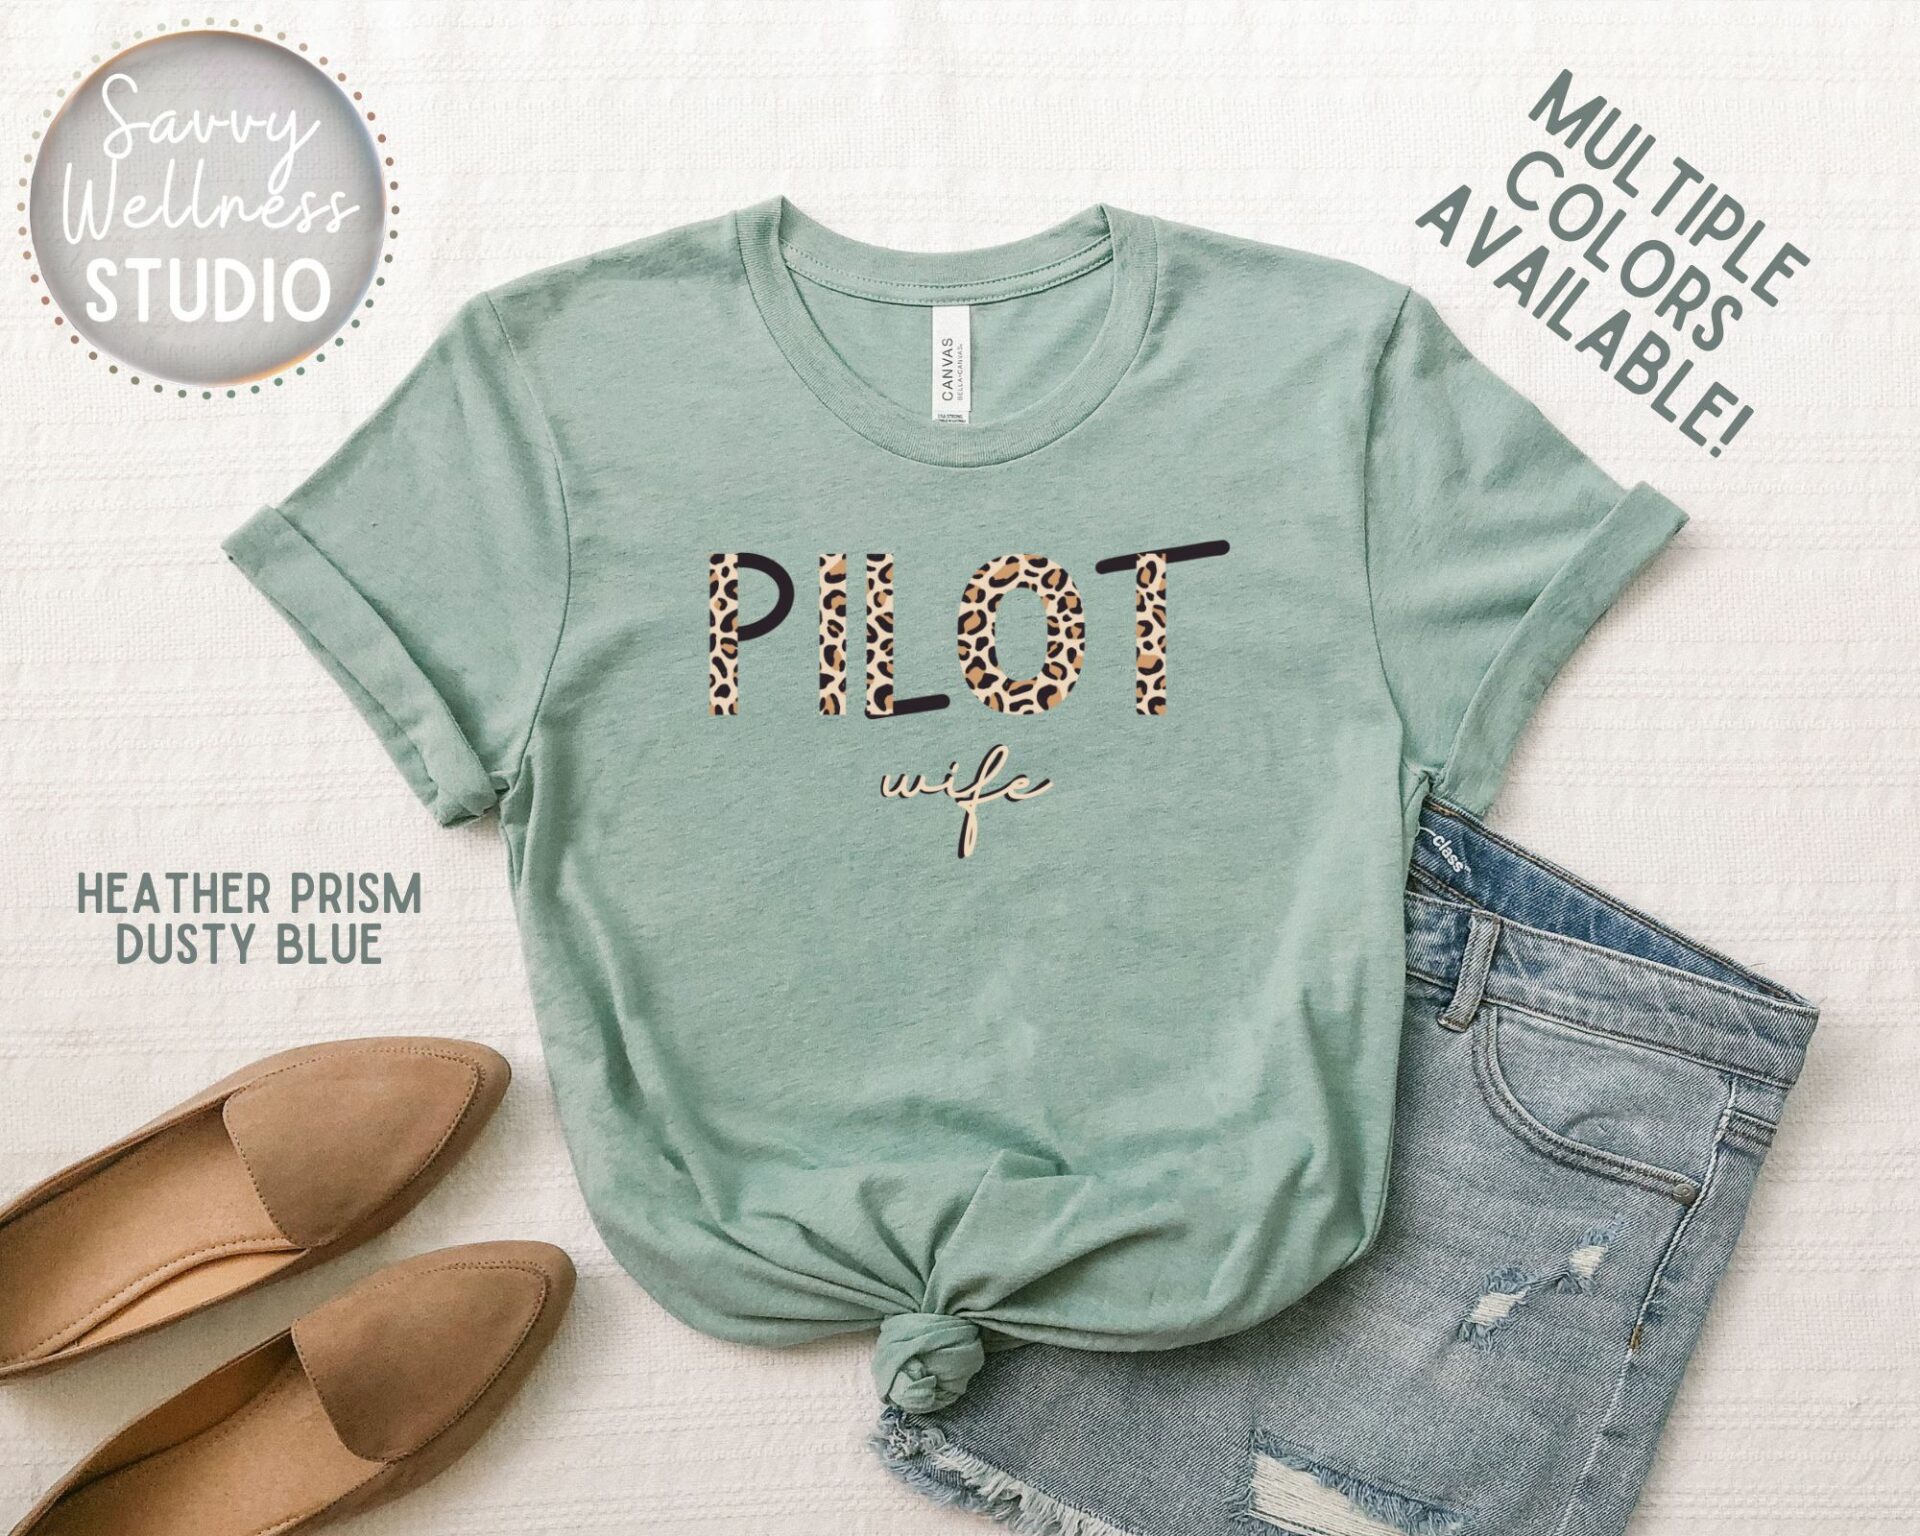 Pilot Wife Cheetah Print Shirt in Heather Prism Dusty Blue